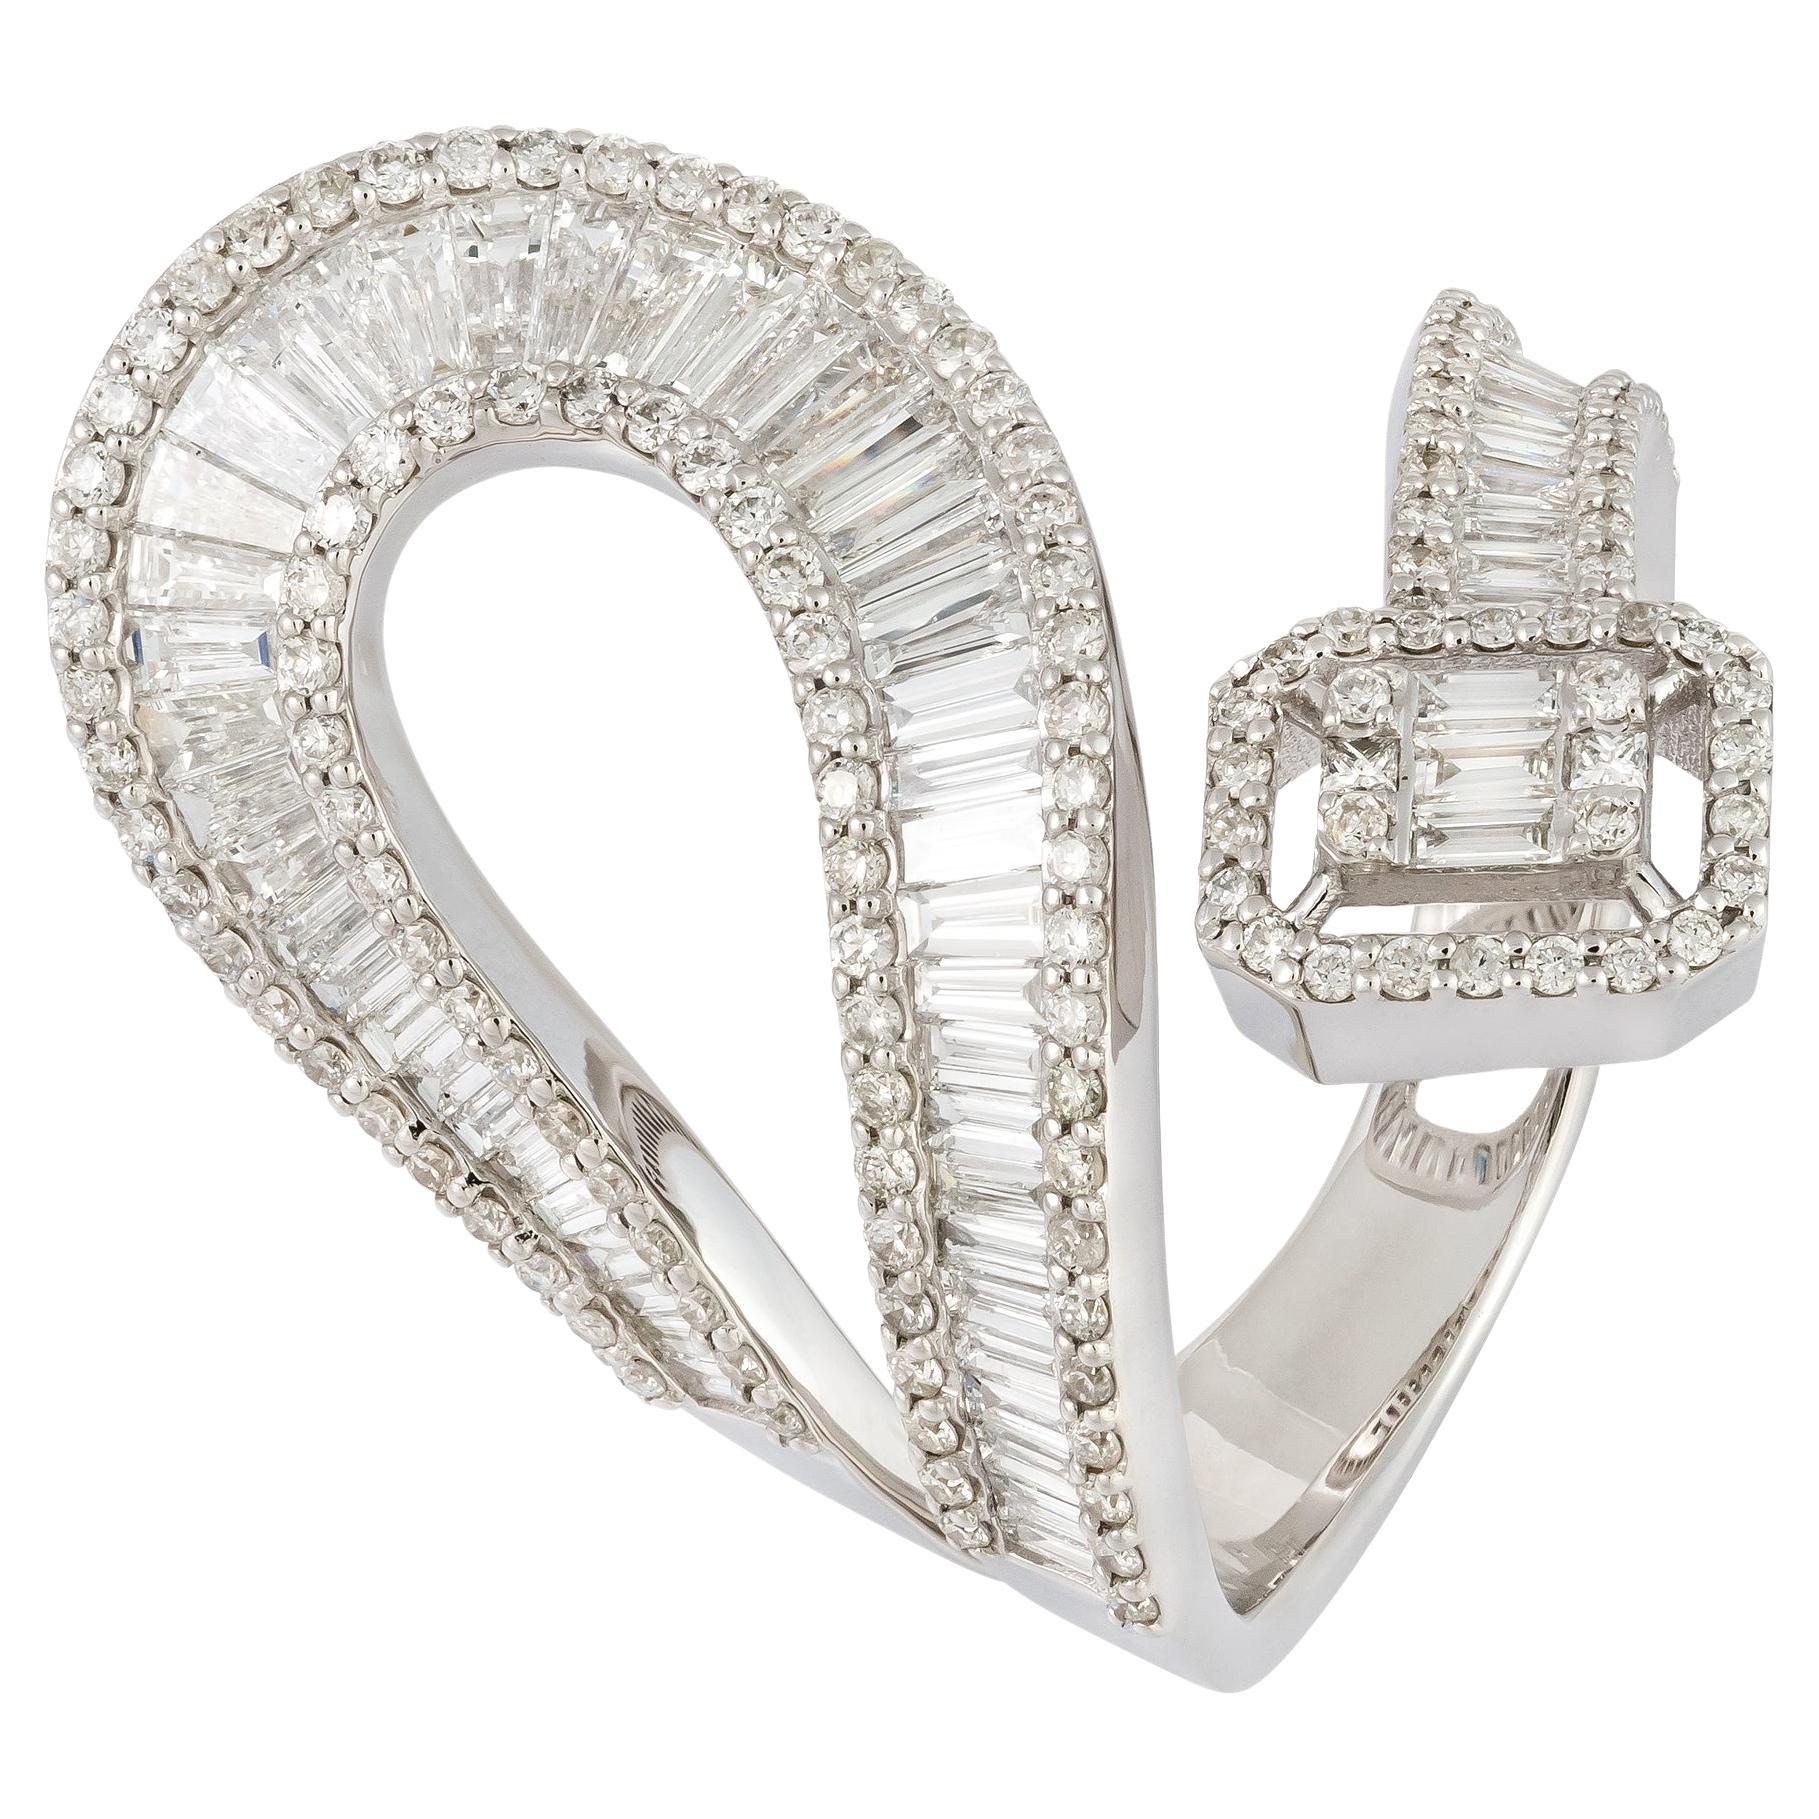 For Sale:  Unique White 18K Gold White Diamond Ring For Her